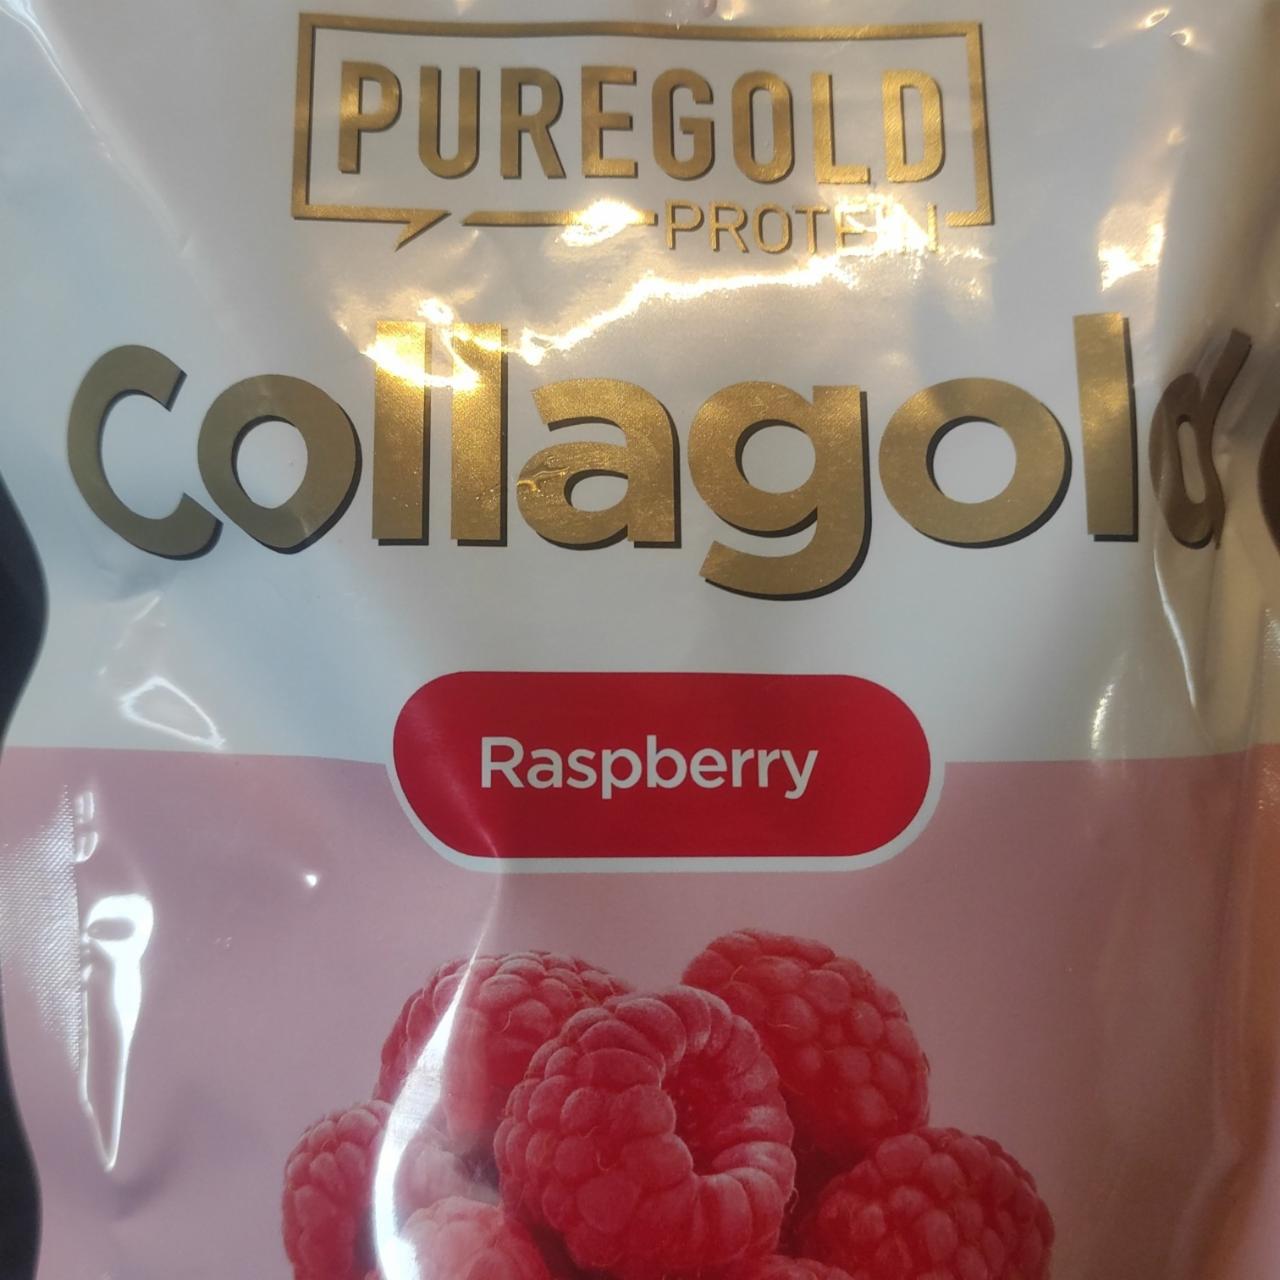 Képek - Collagold Raspberry Puregold